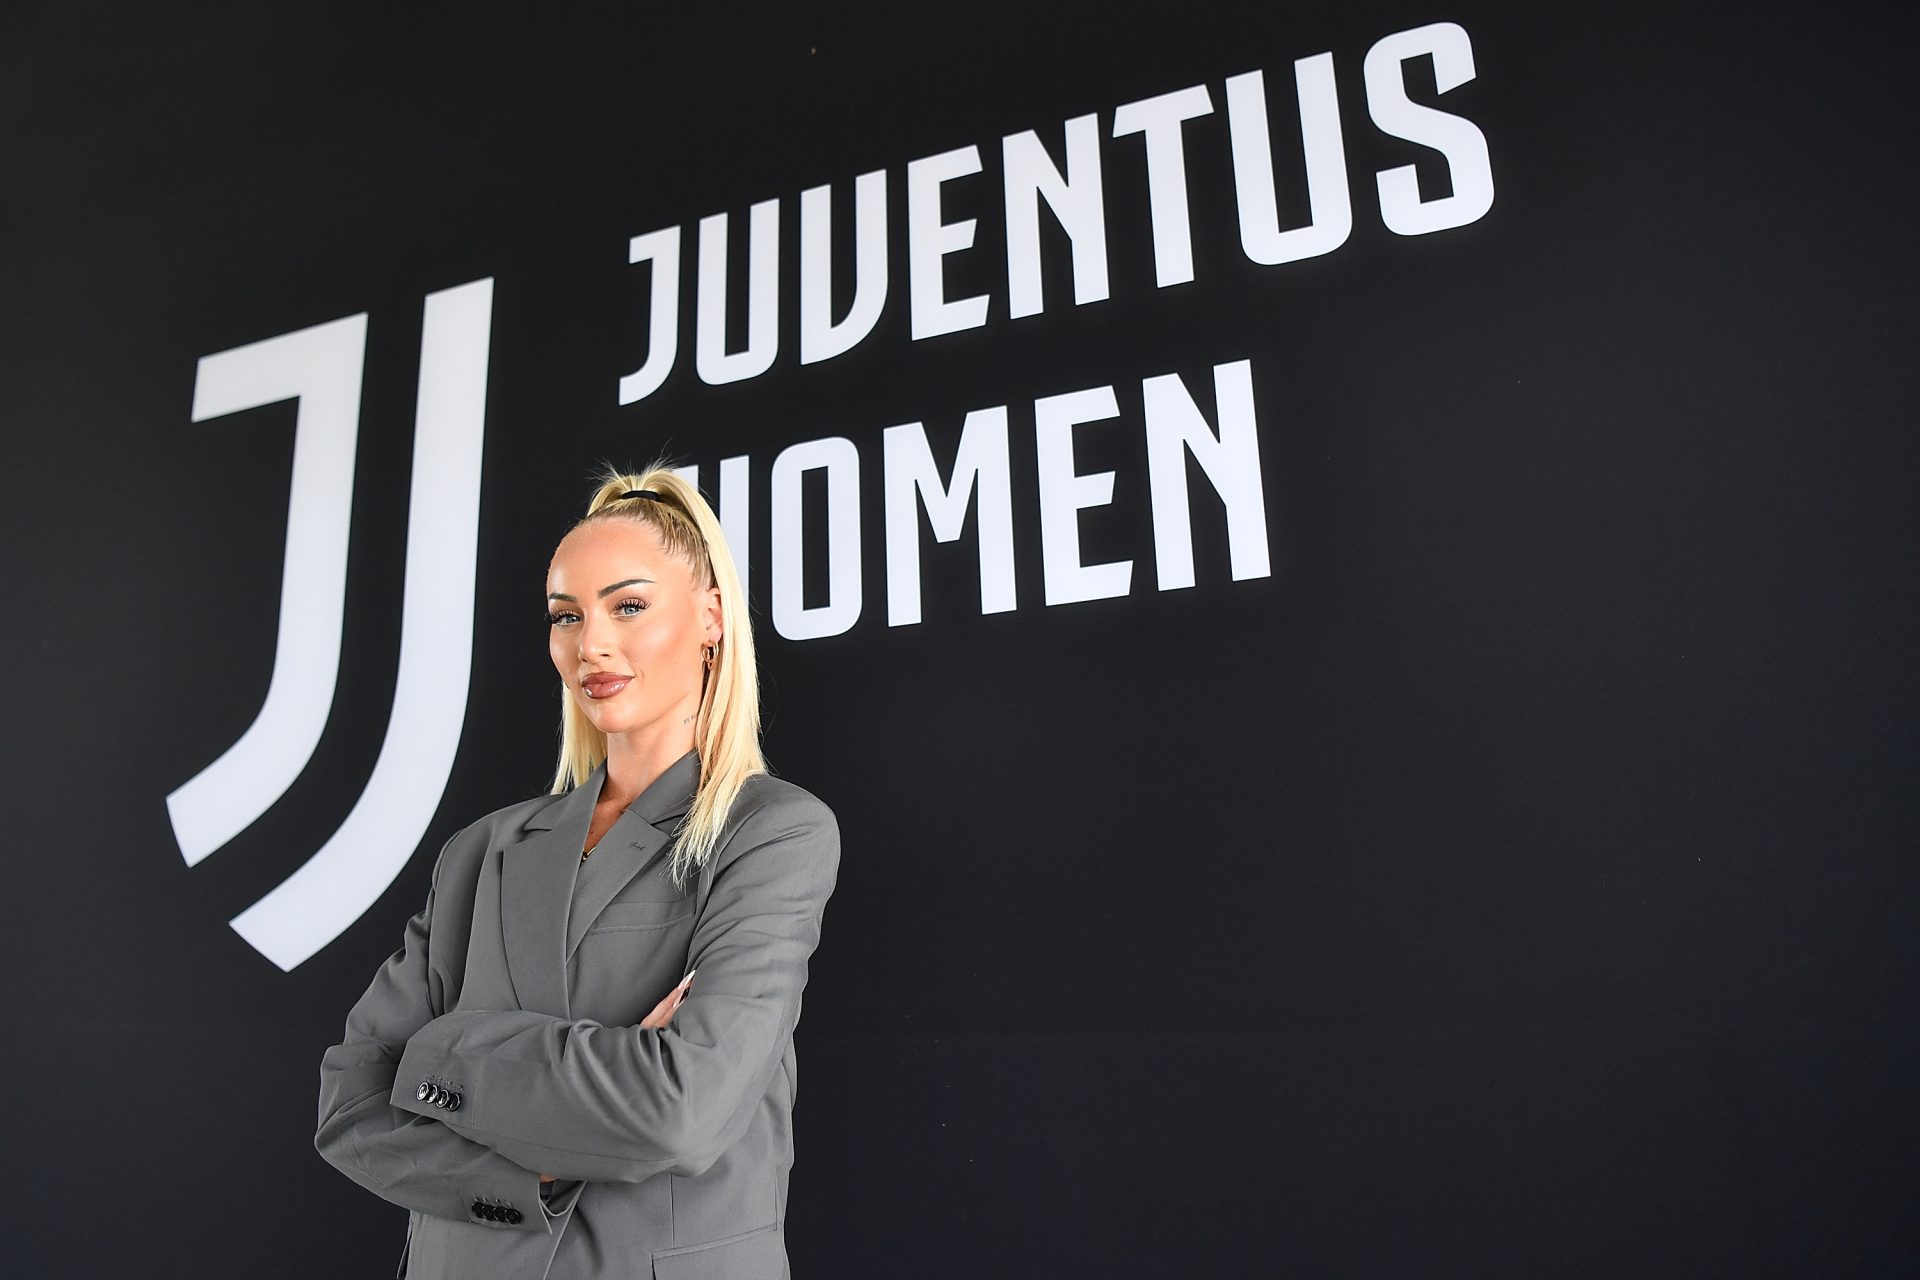 Alisha Lehmann to Juventus - All you need to know